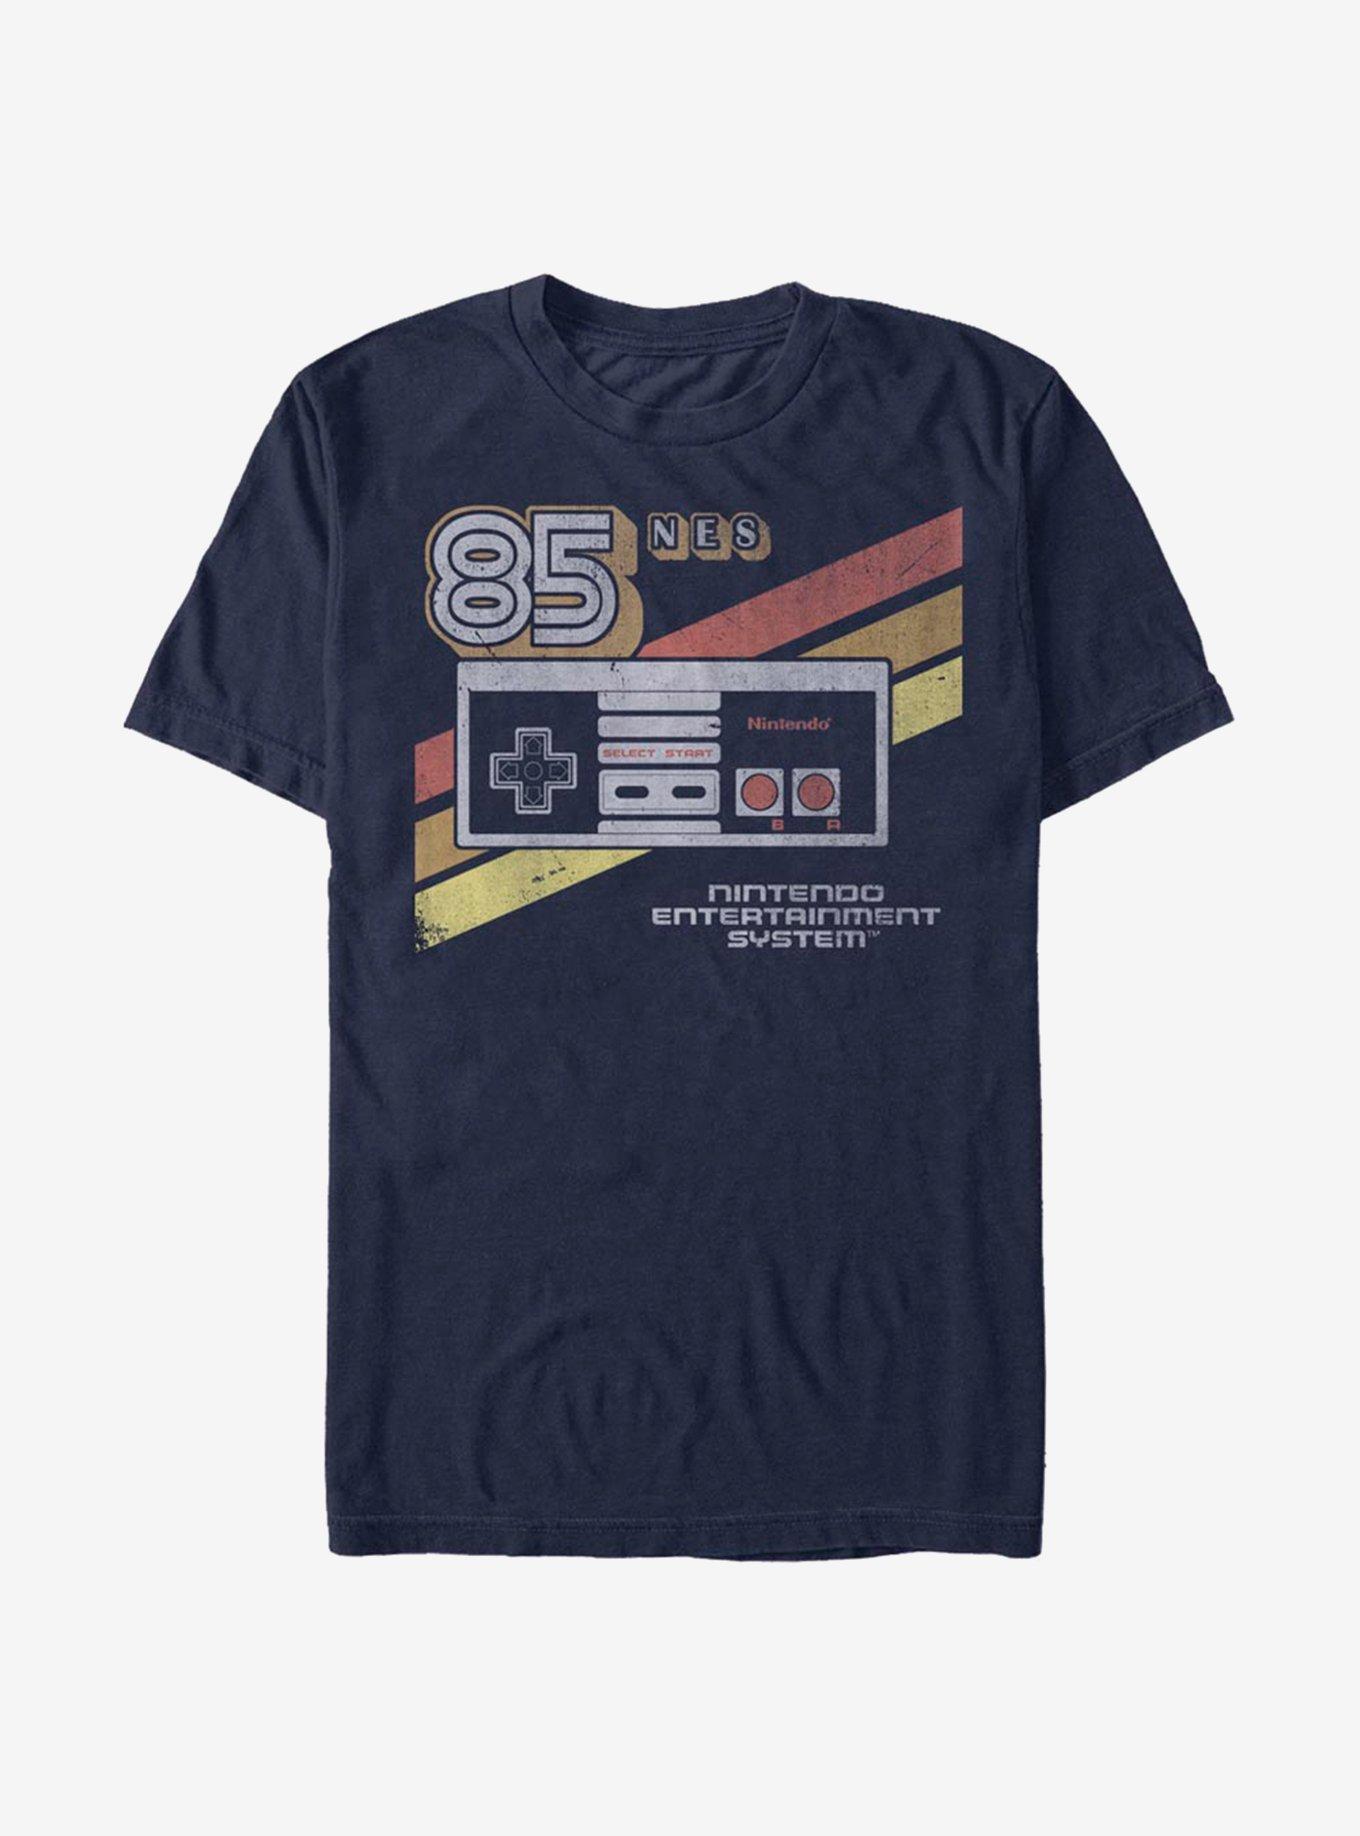 Nintendo 85 NES Entertainment System T-Shirt